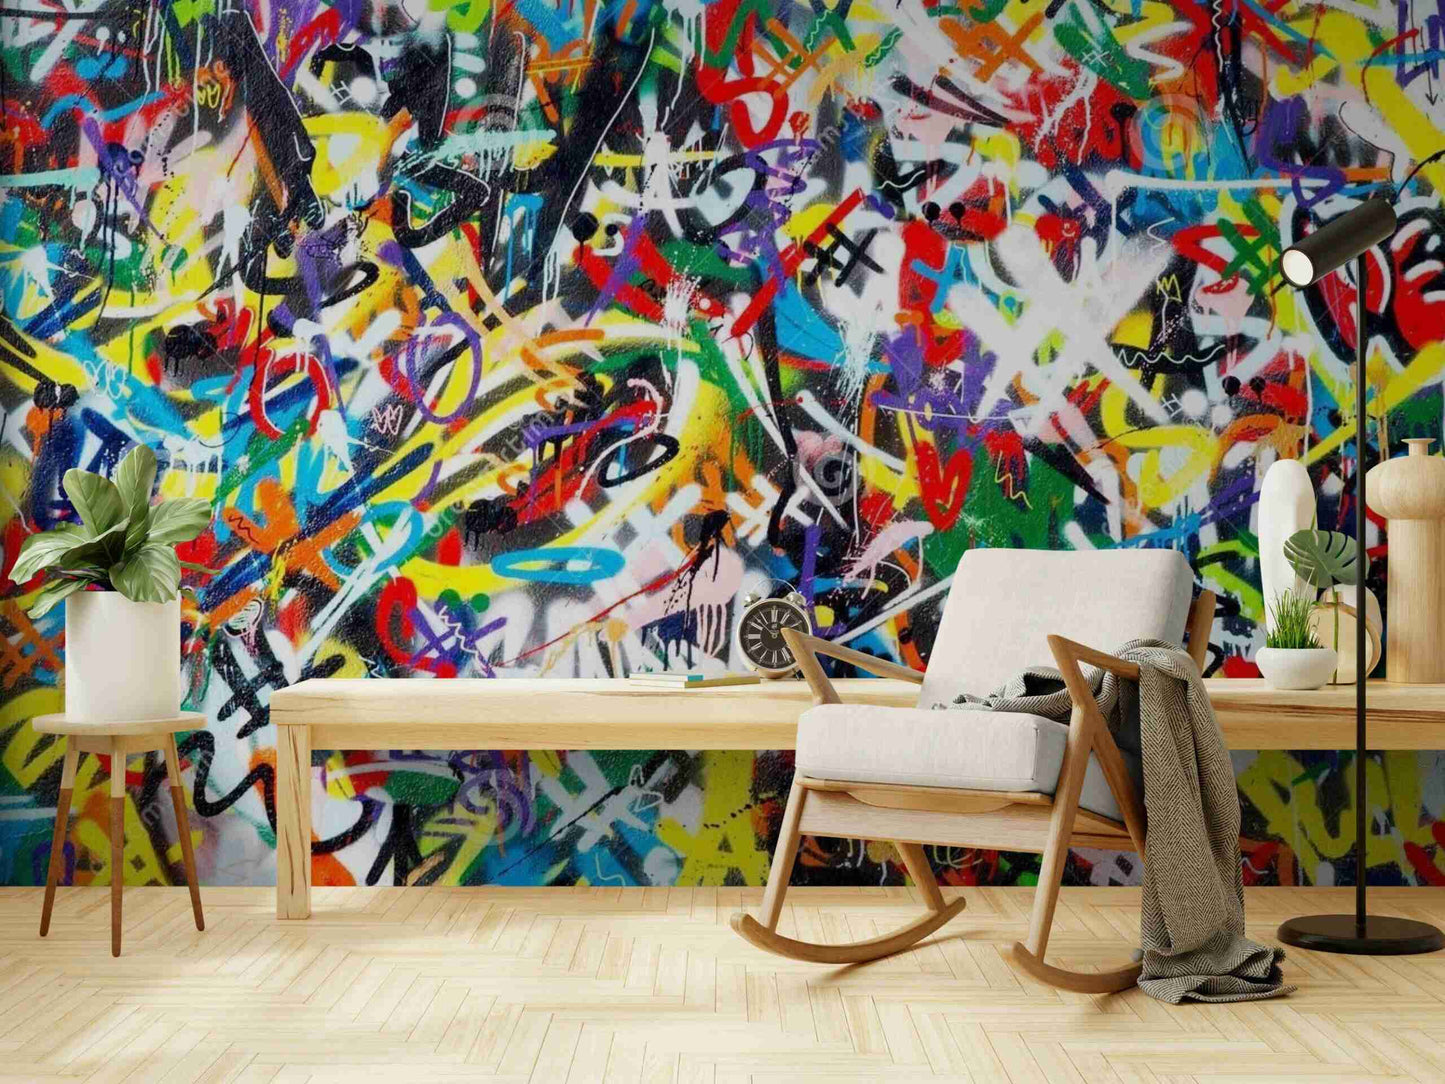 Peel and Stick Graffiti Wallpaper in Urban Street Art Style - Vibrant and Bold Wallpaper Design for Easy Home Decor